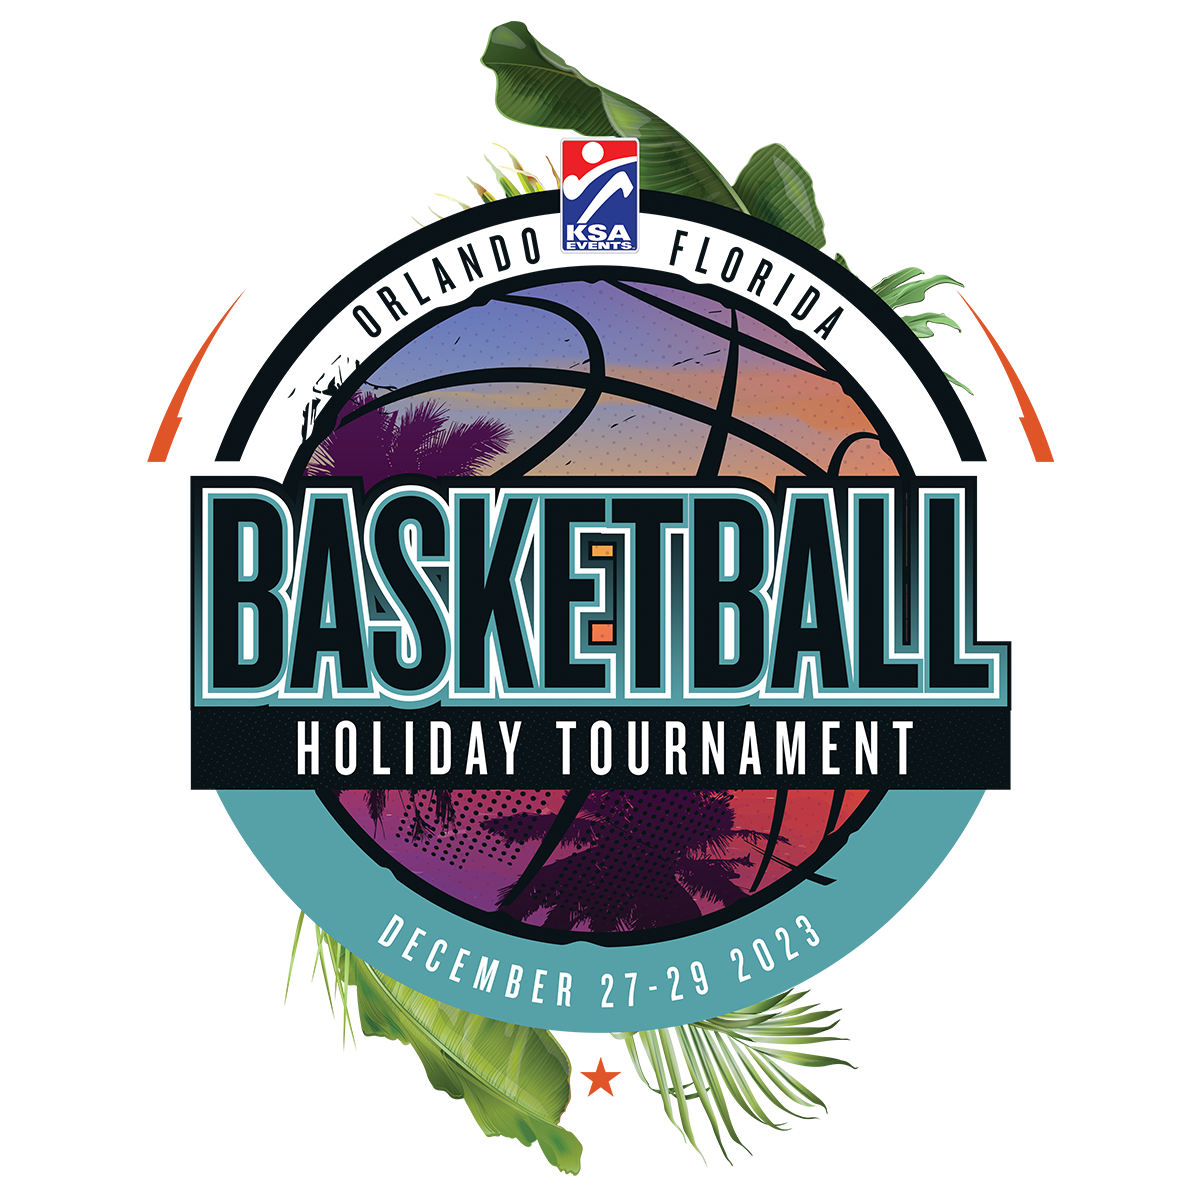 2023 Basketball Holiday Tournament (Florida Resident) Passes